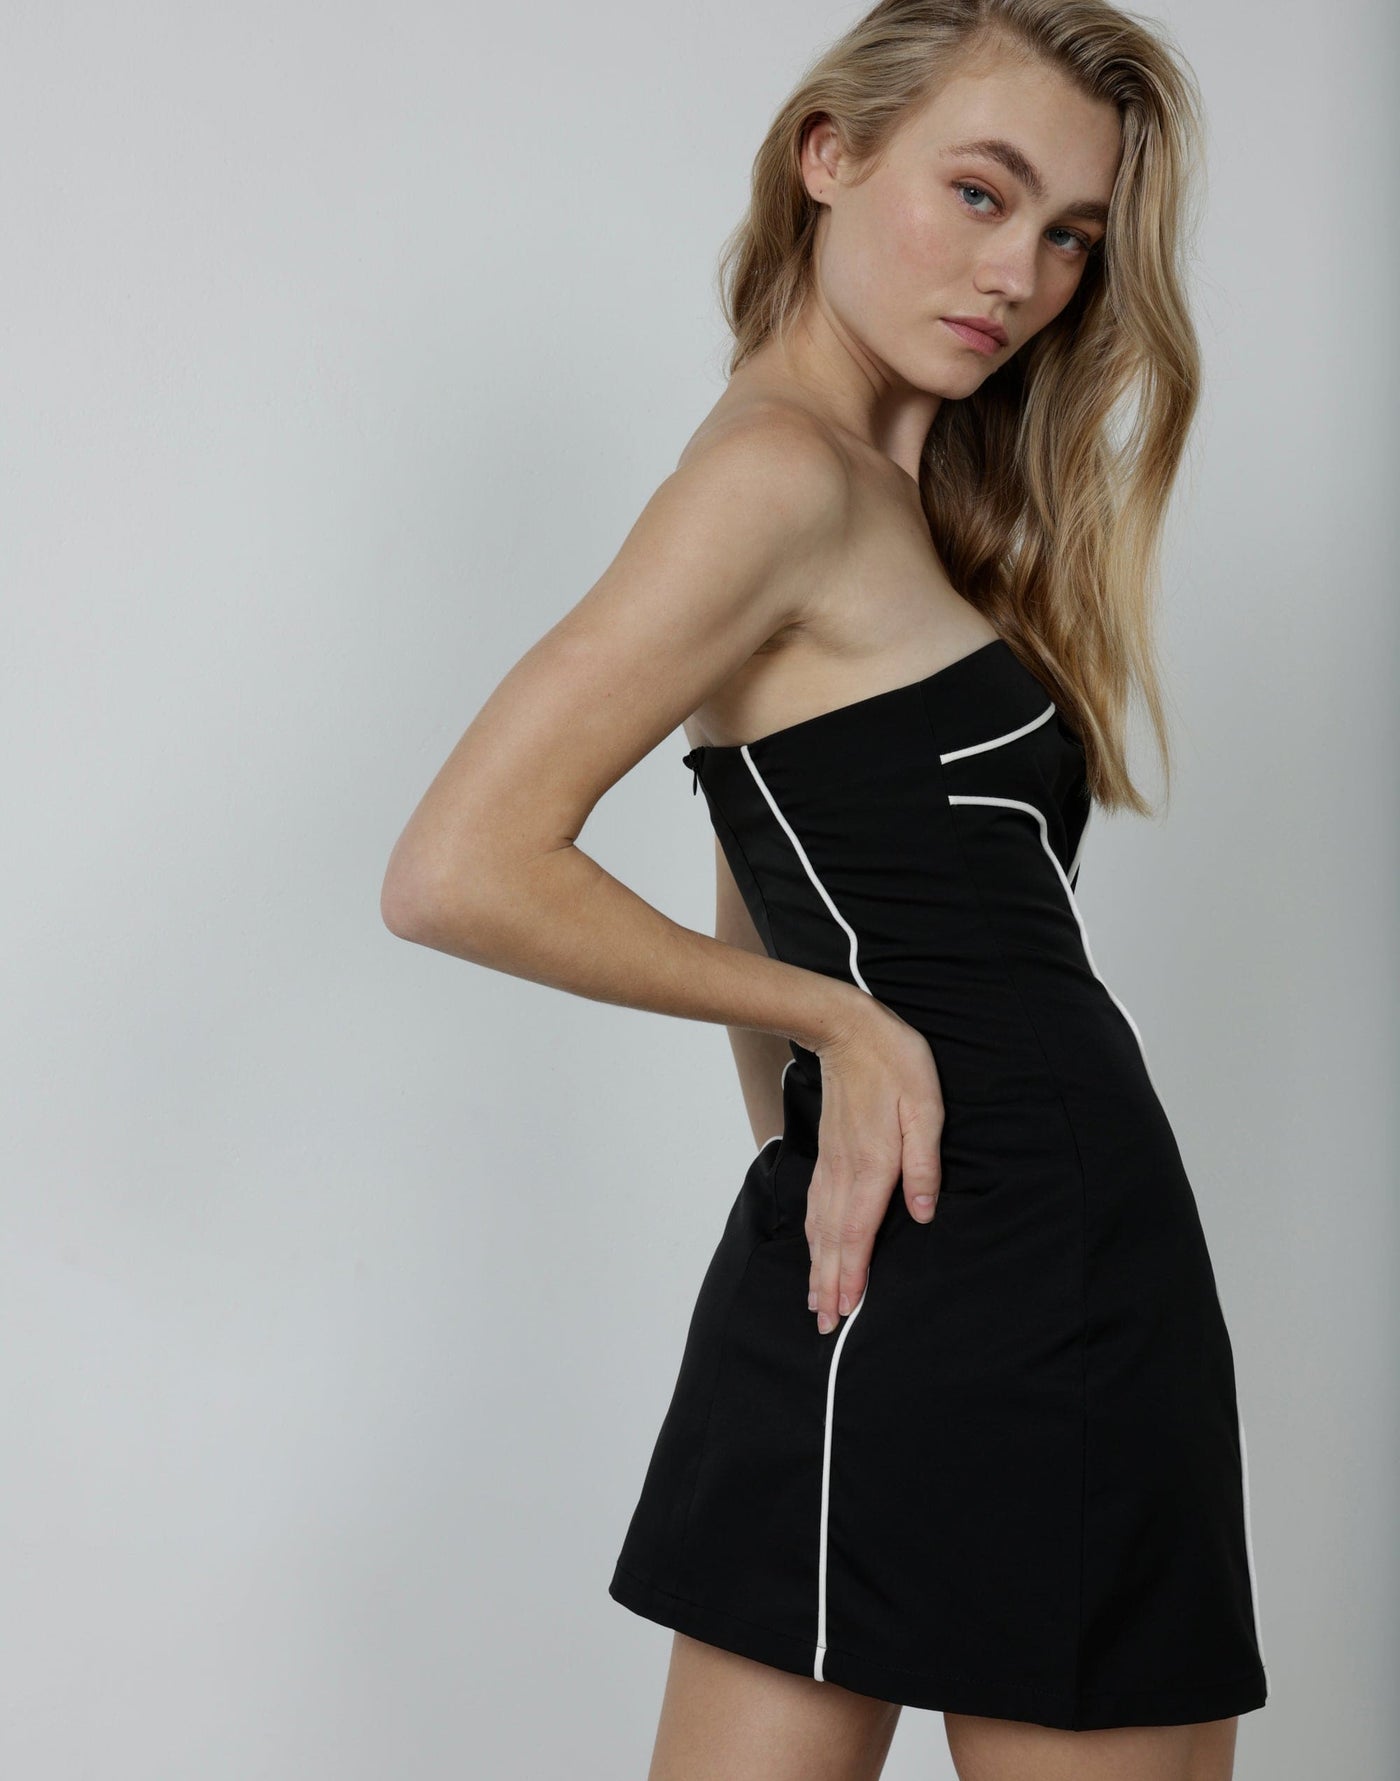 Electric Mini Dress (Black) - White Contrast Stitching Mini Dress - Women's Dress - Charcoal Clothing